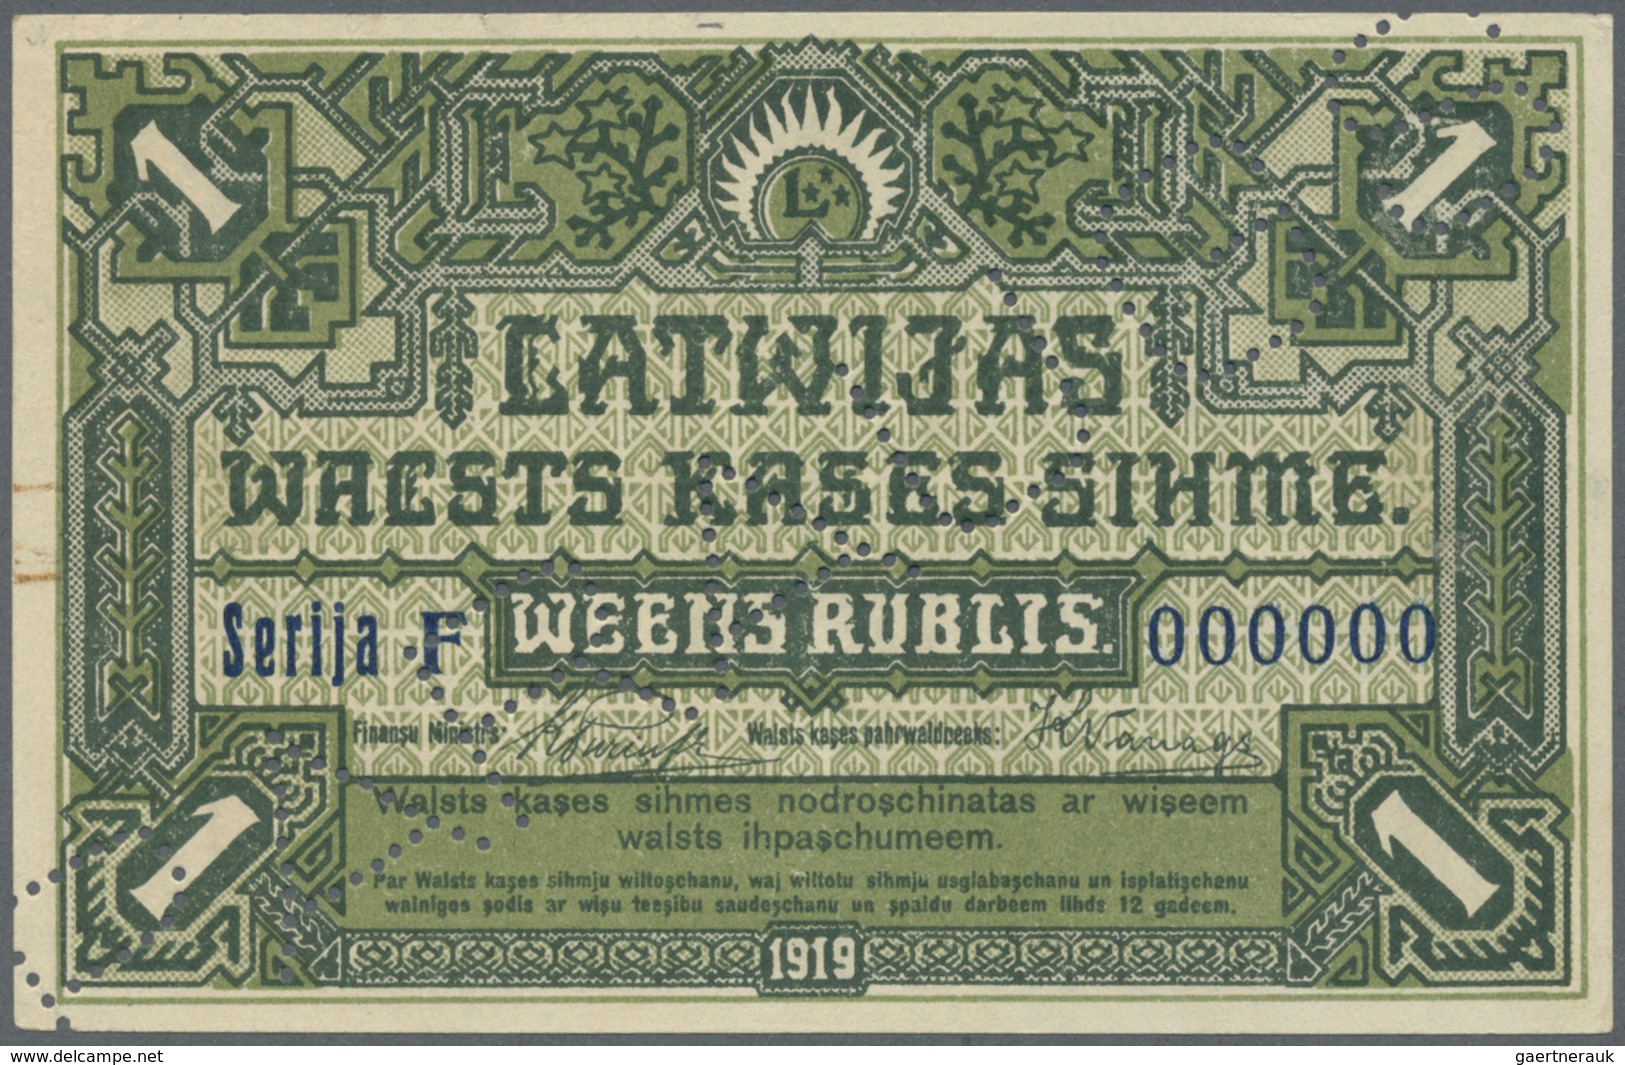 Latvia / Lettland: Rare Specimen Of 1 Rubli 1919 P. 2bs, Series "F" With Zero Serial Numbers, "PARAU - Latvia